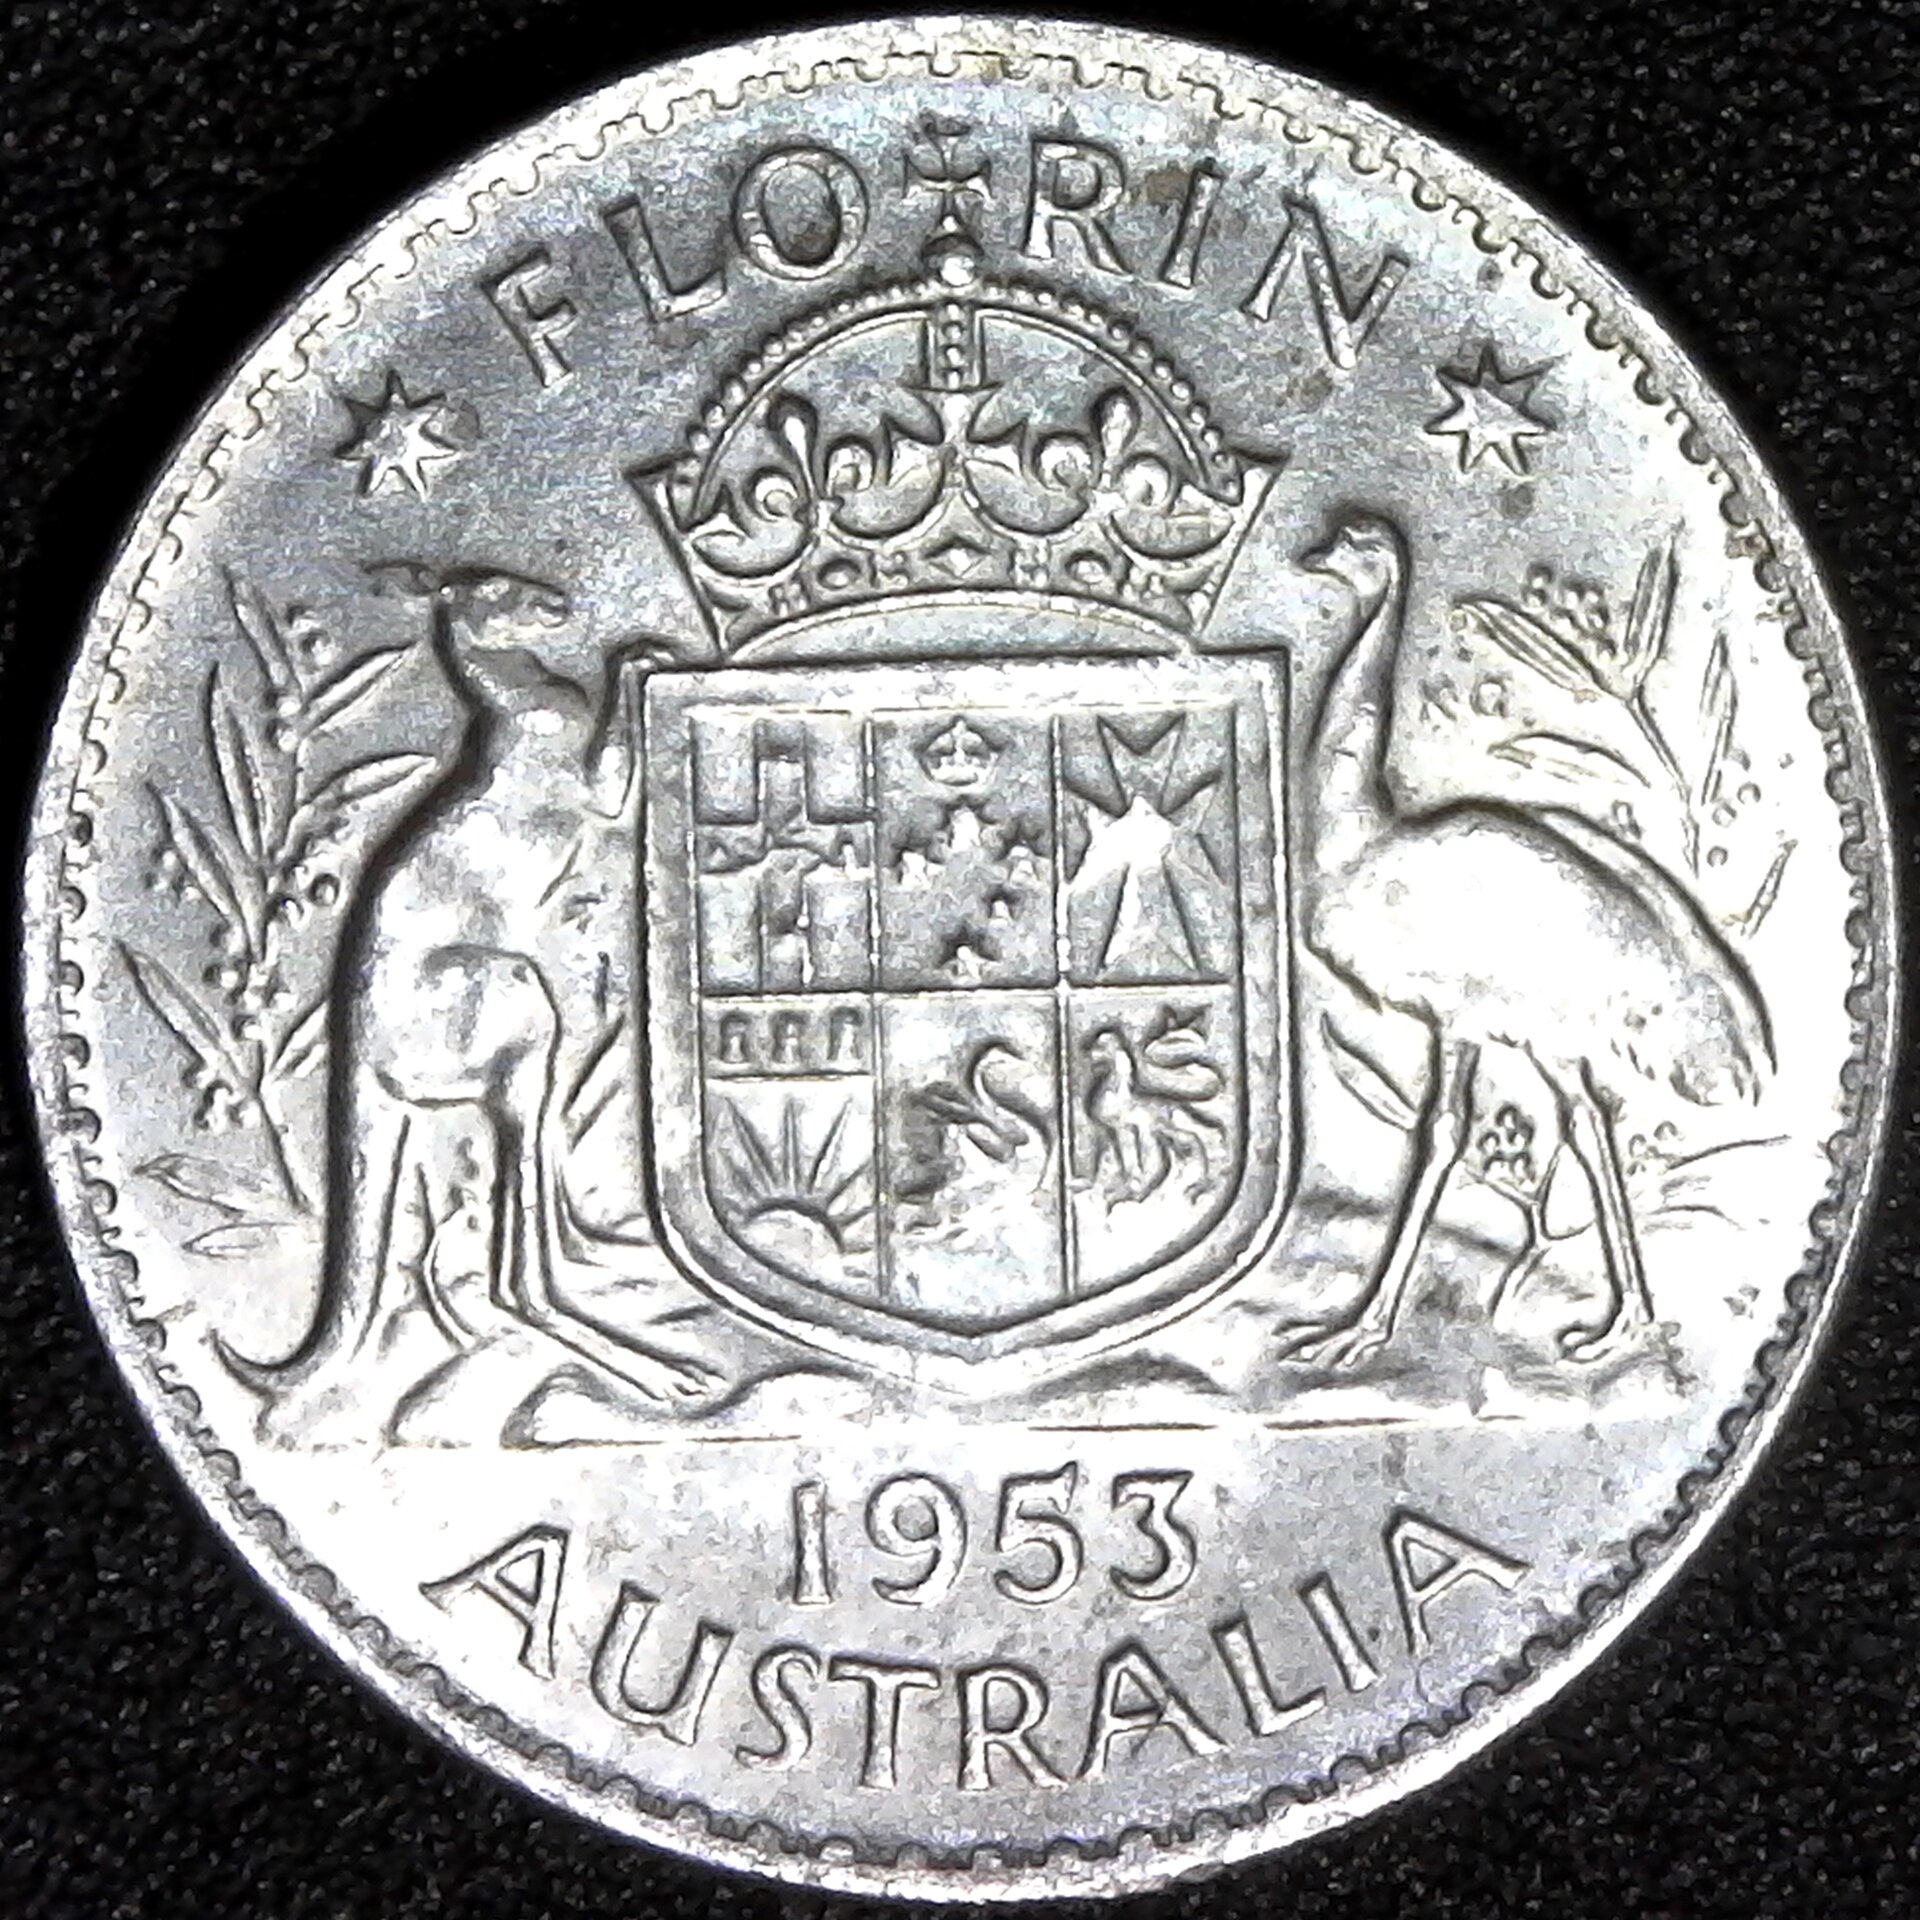 Australia Florin 1953 rev.jpg